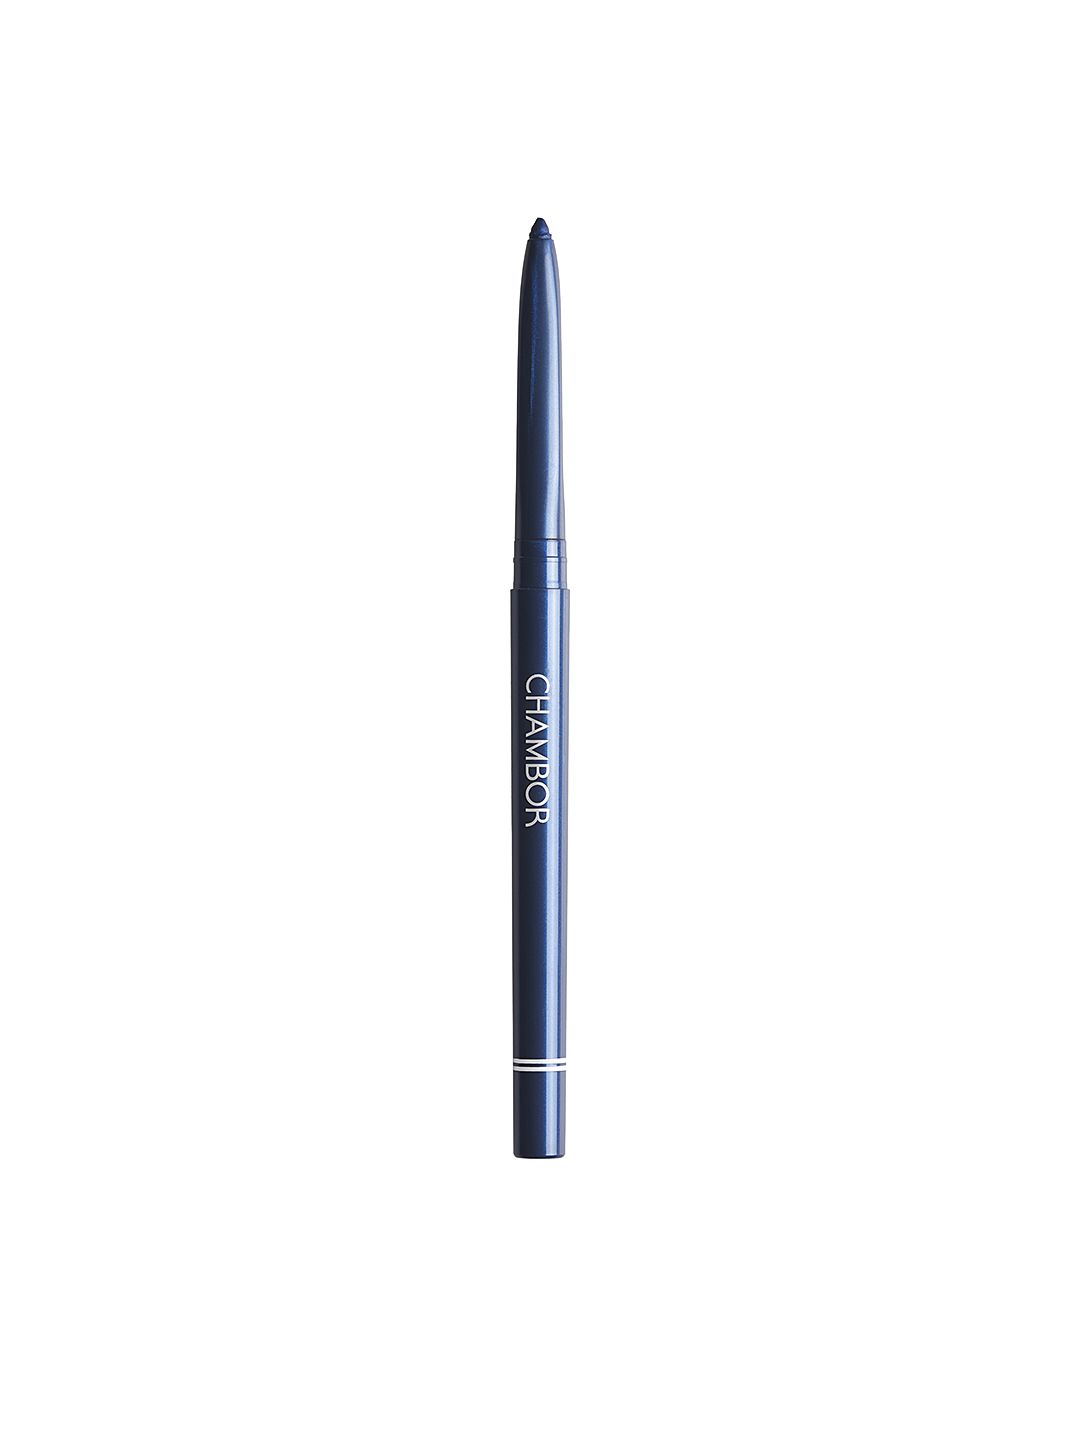 CHAMBOR Intense Definition Sapphire Blue Gel Eyeliner Pencil 104 Price in India